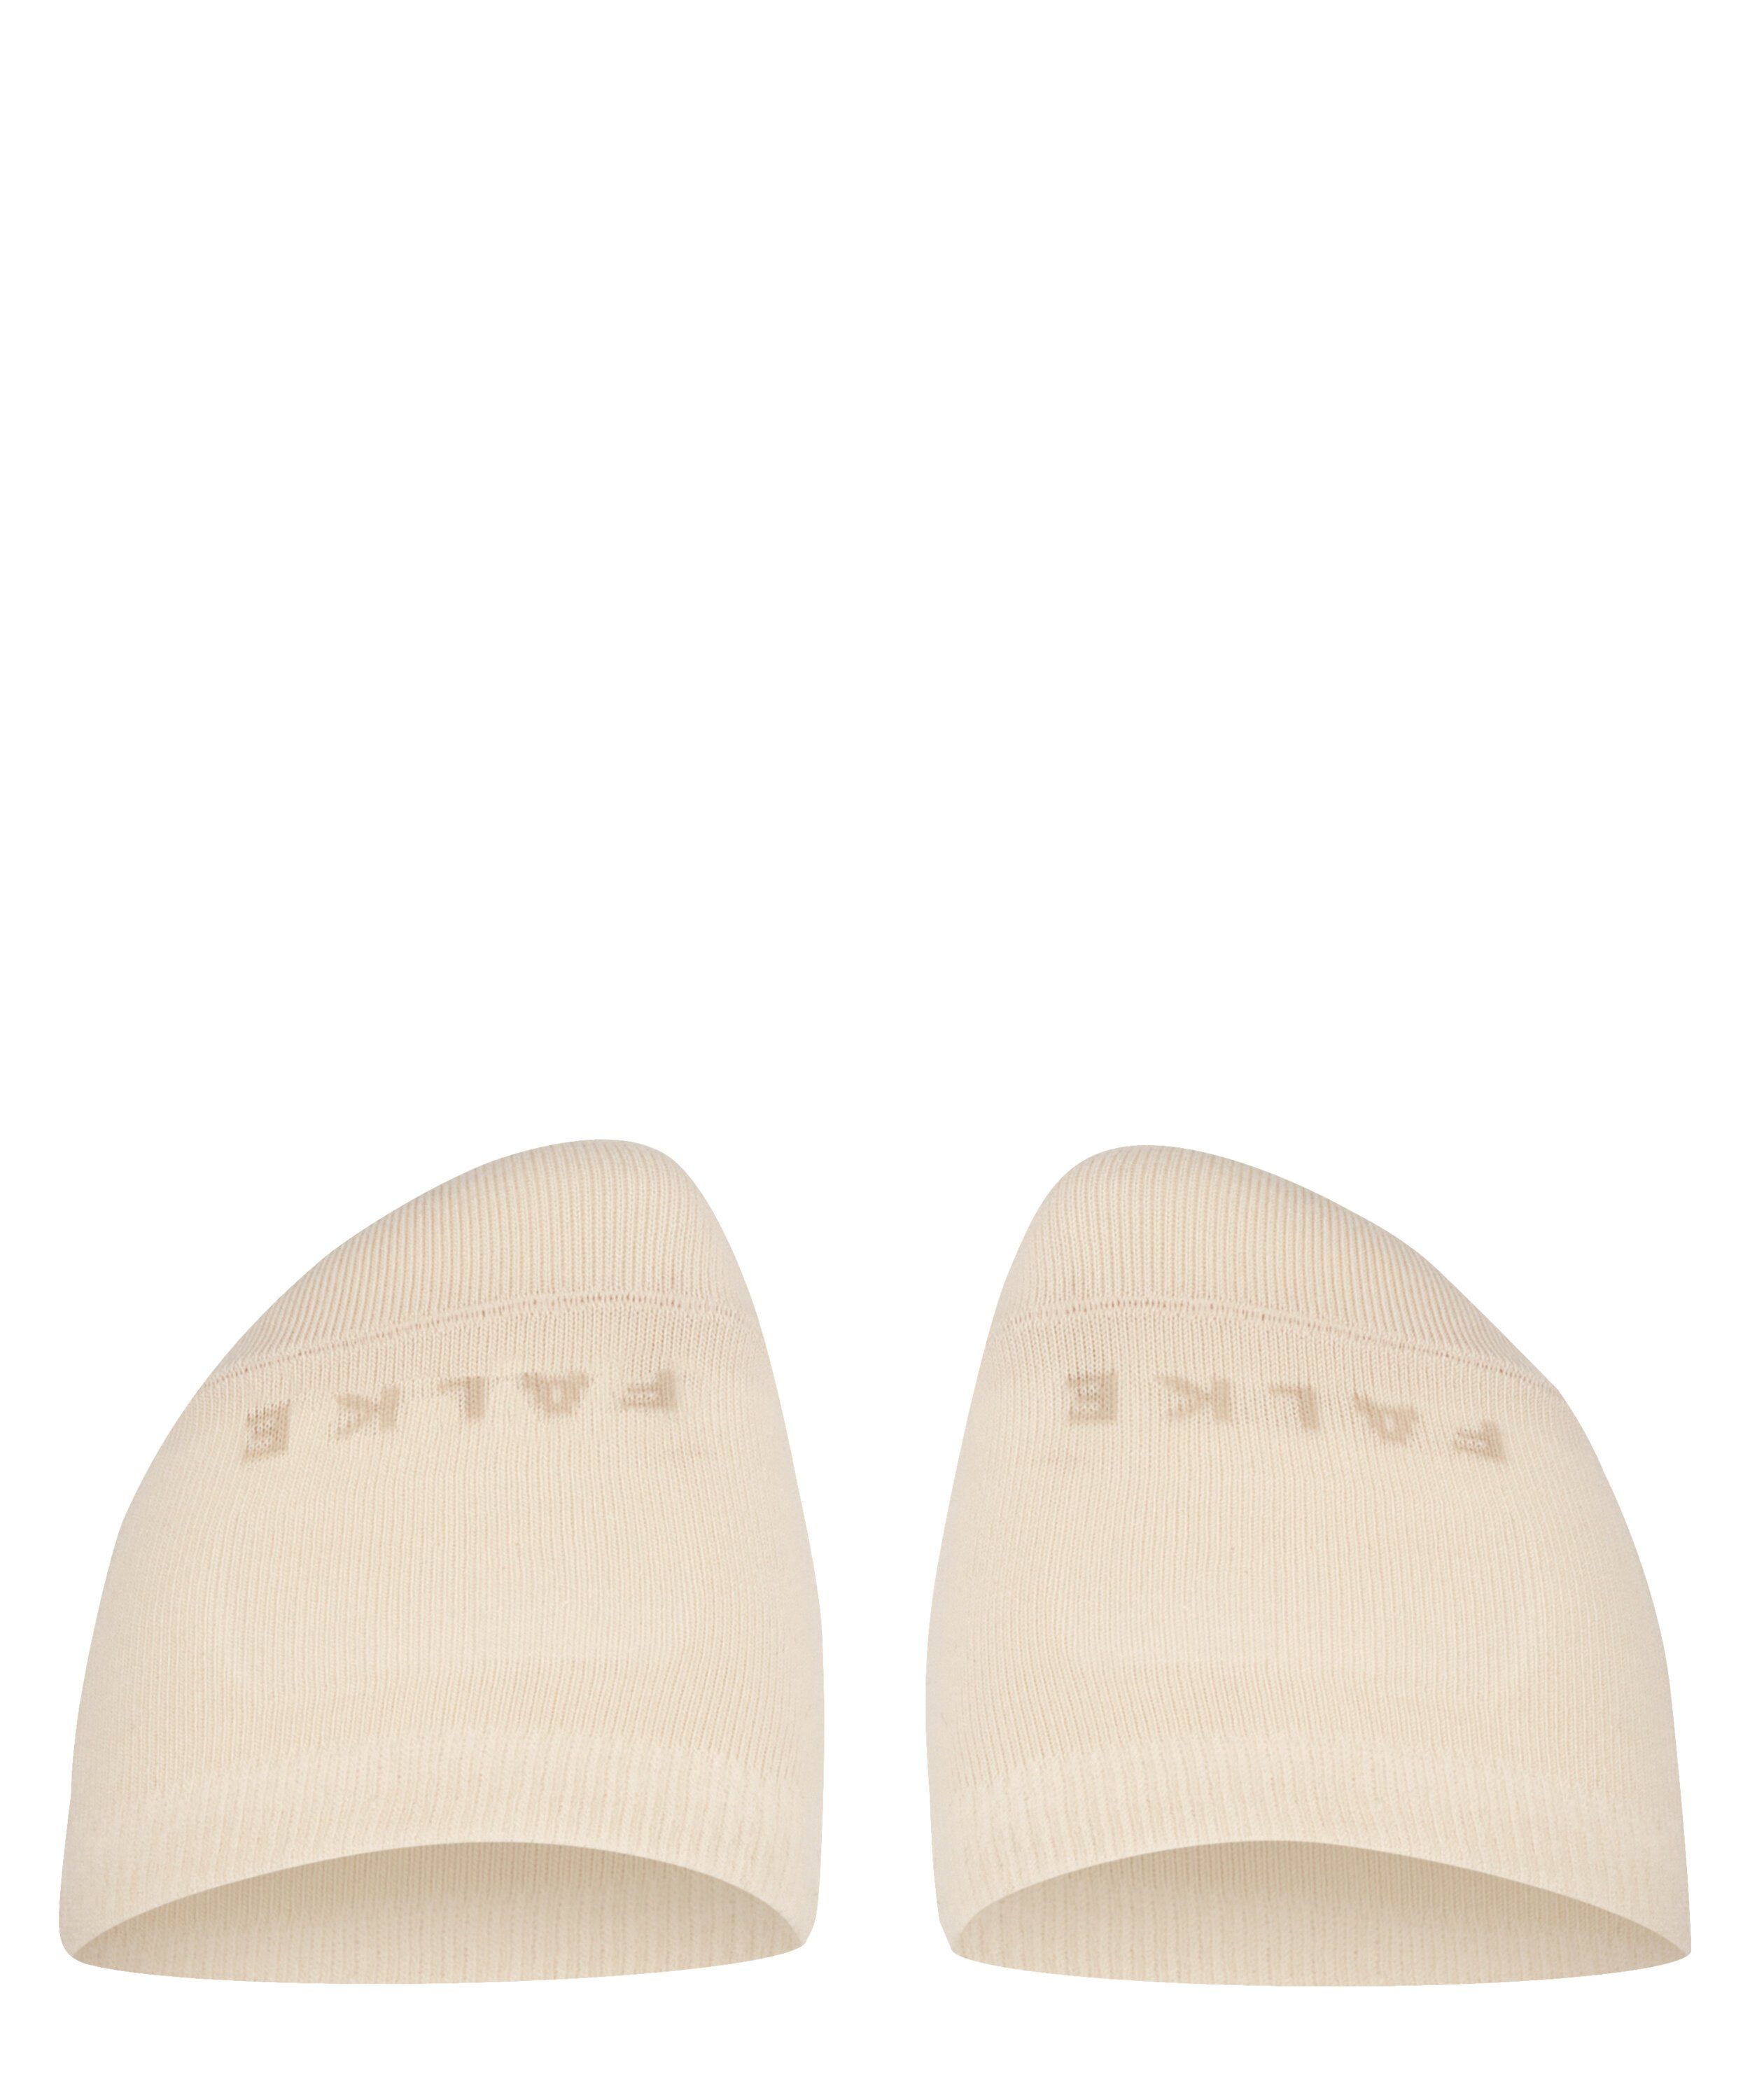 die Sock für Fußspitzen Toe FALKE Füßlinge (4019) cream